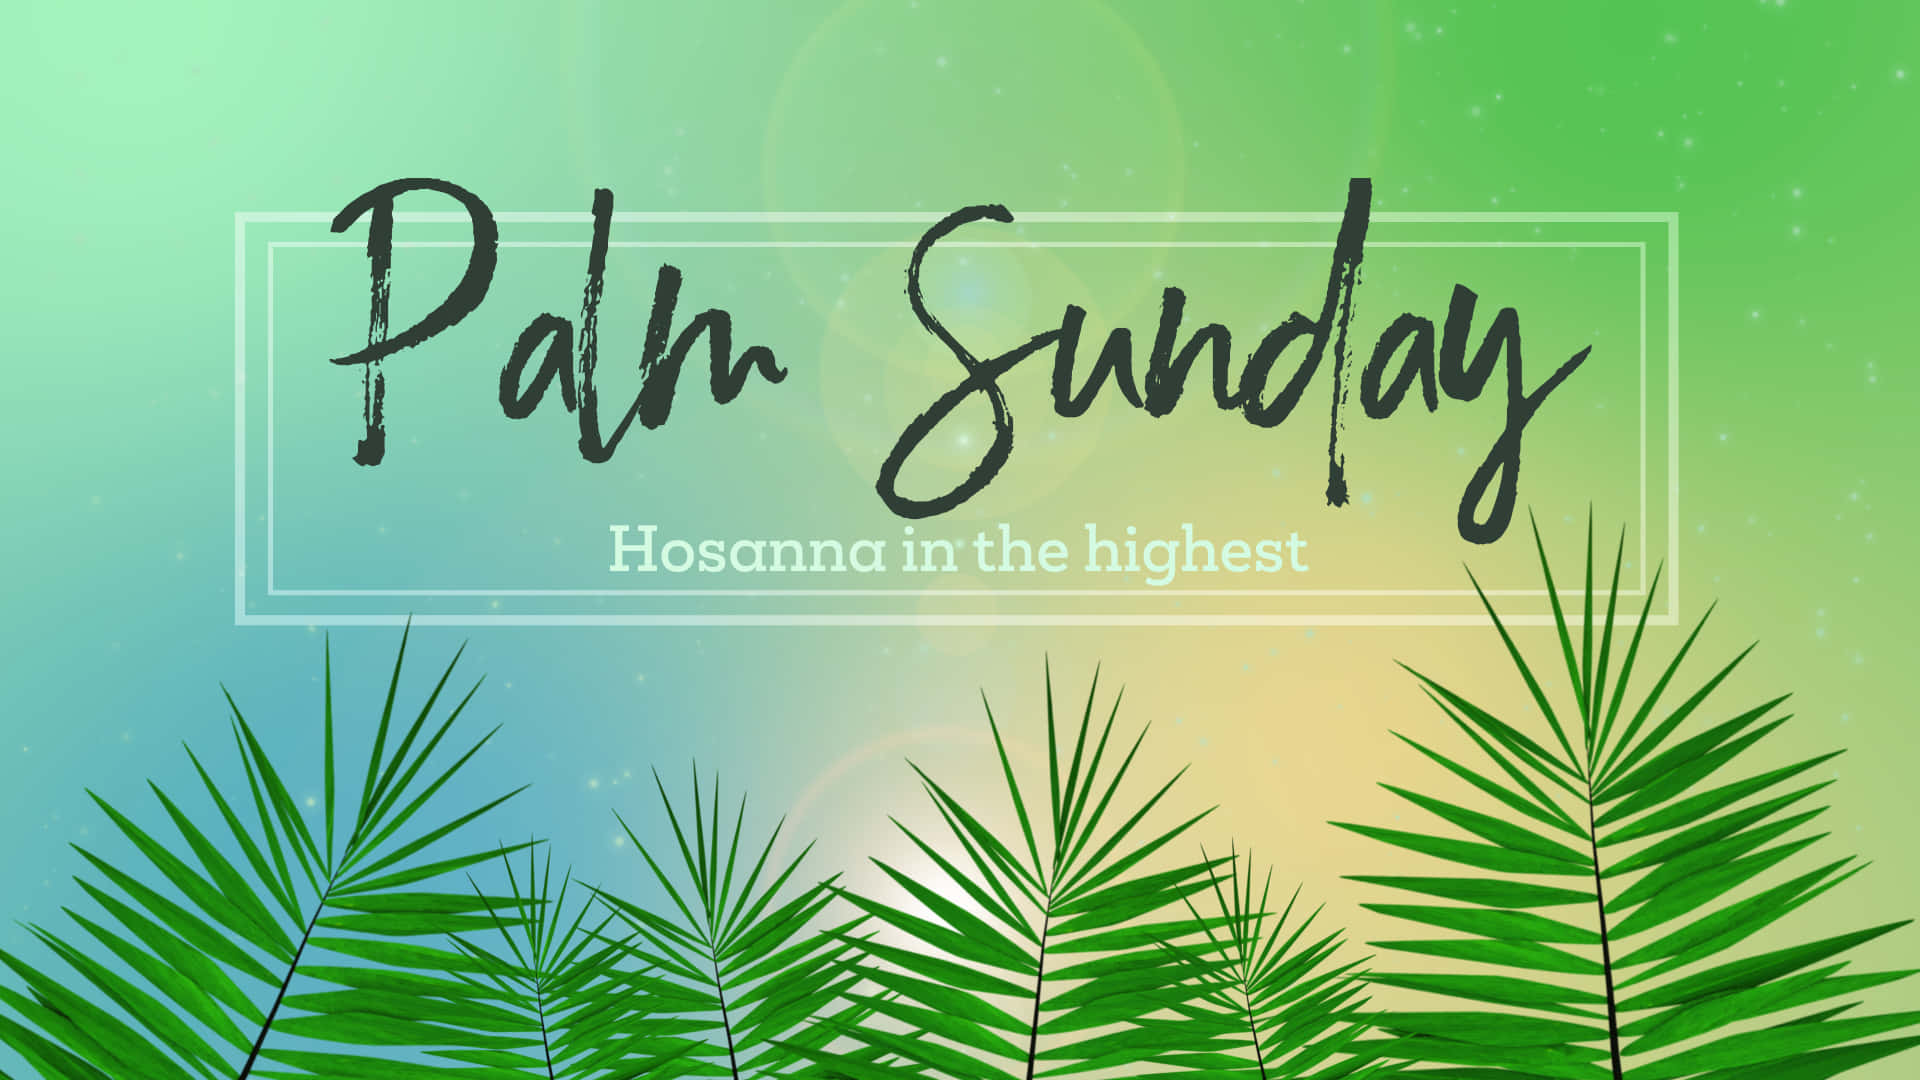 Hossana In Highest Palm Sunday Text Background